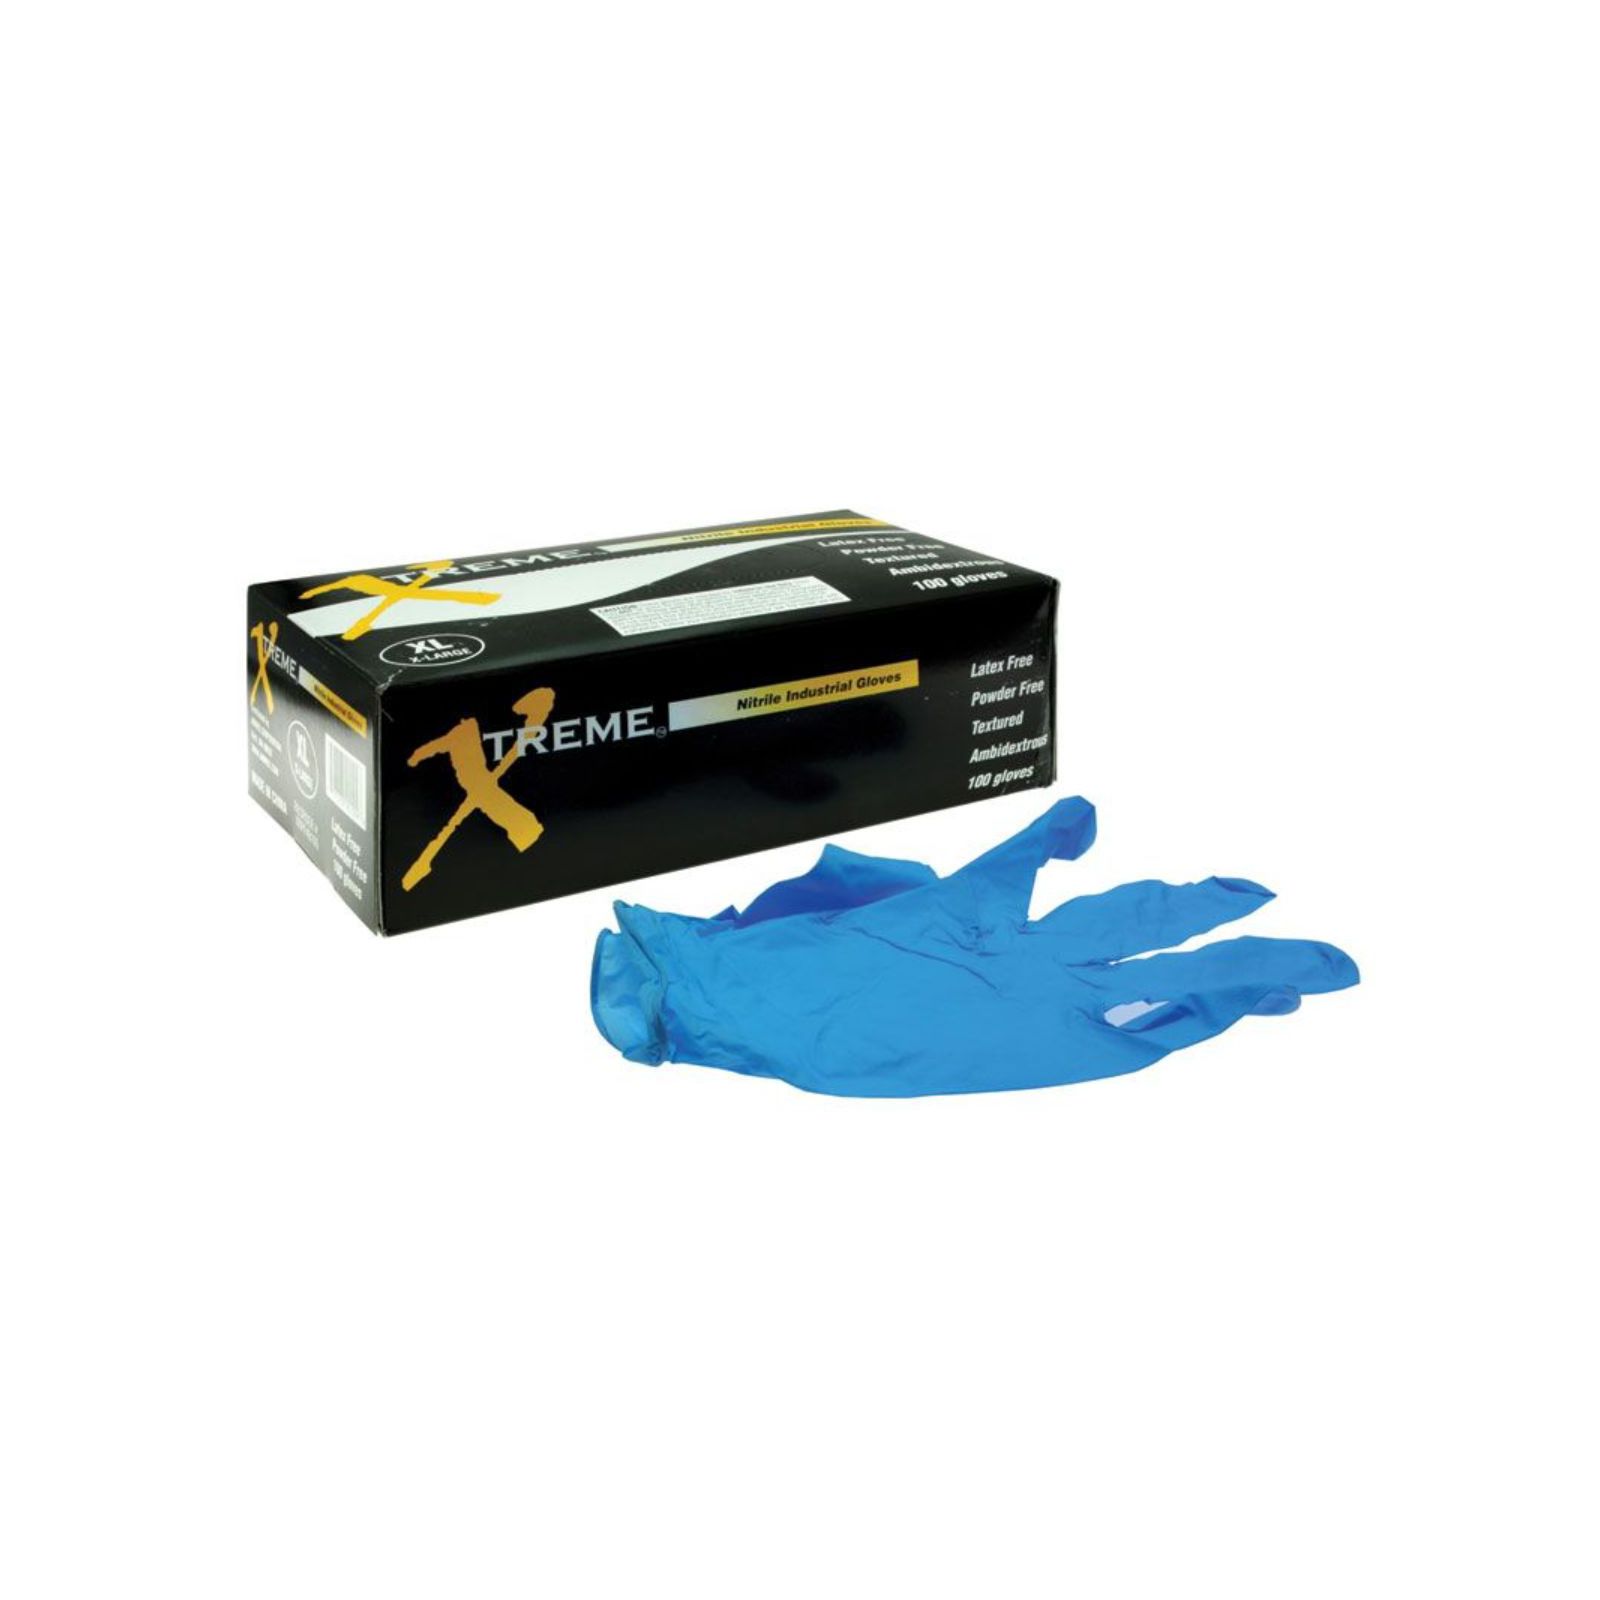 ShuBee 849136 - Gloves - Powderfree Nitrile - XL (Box of 100)